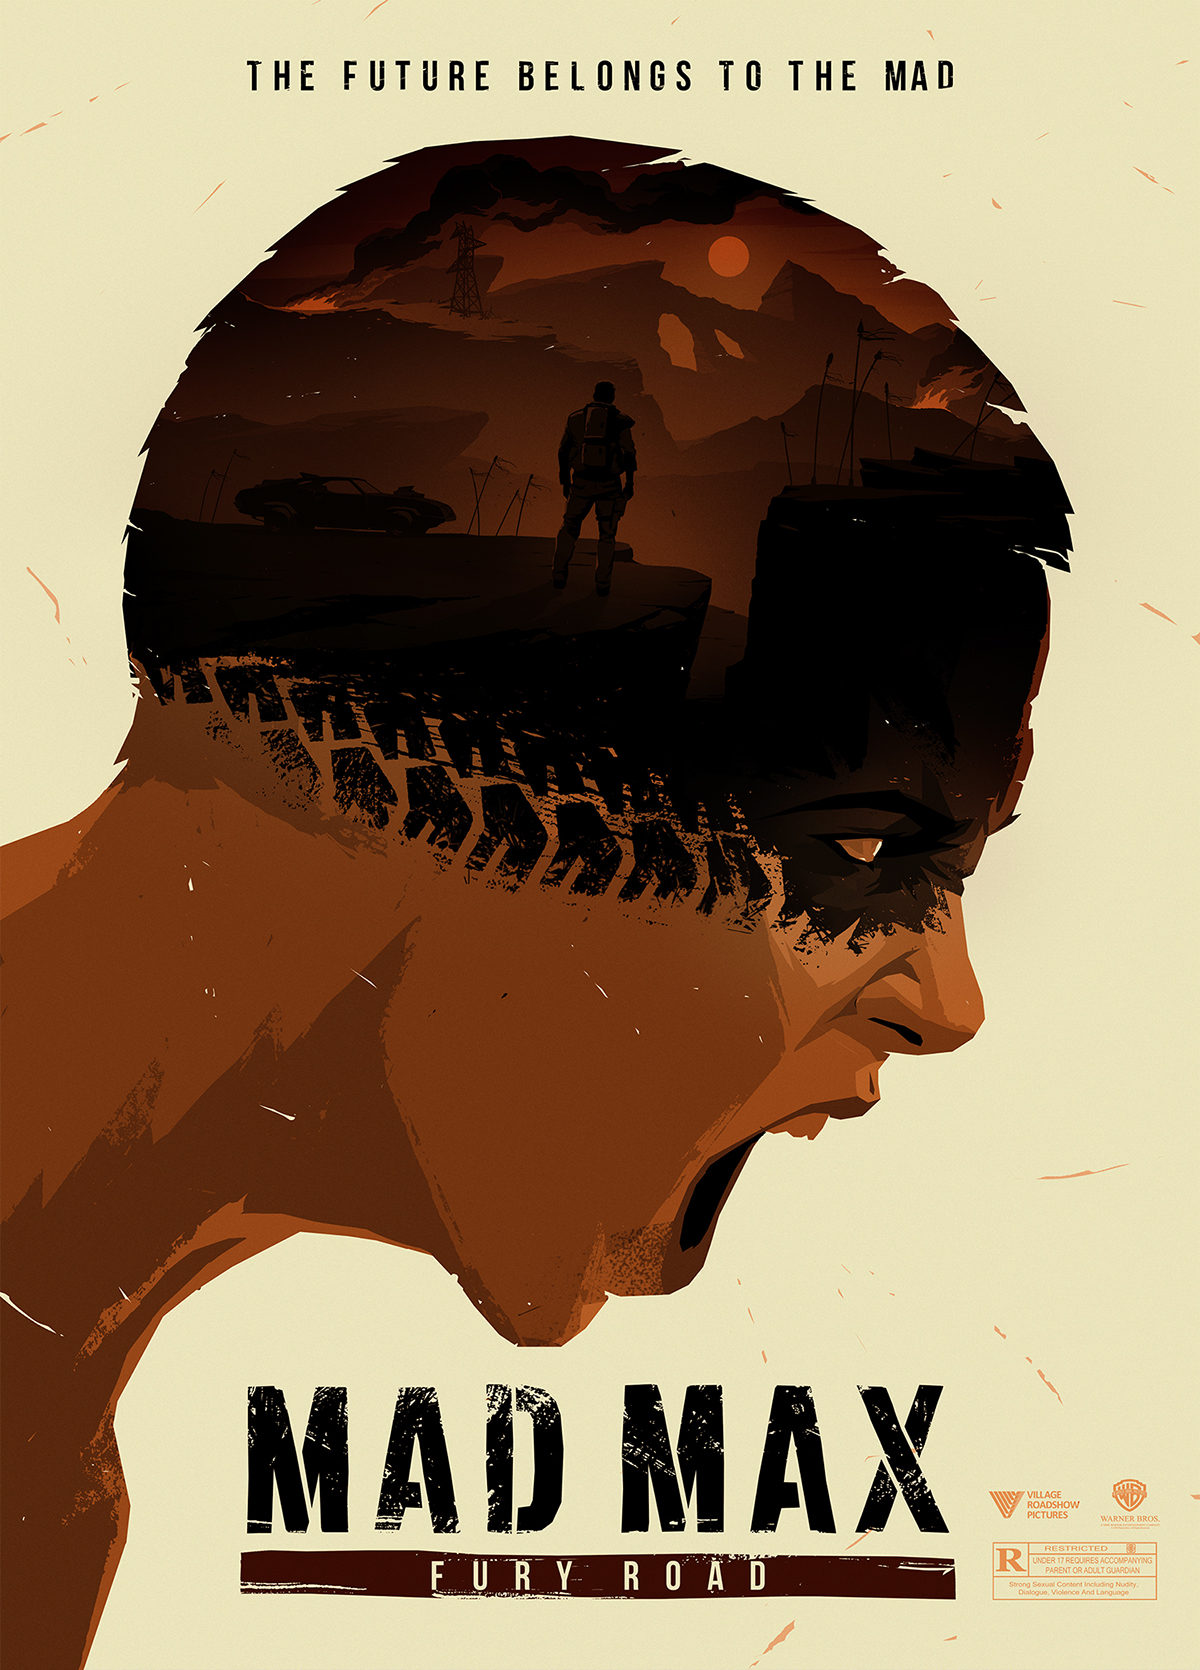 Fury mad nudity max road Mad Max: